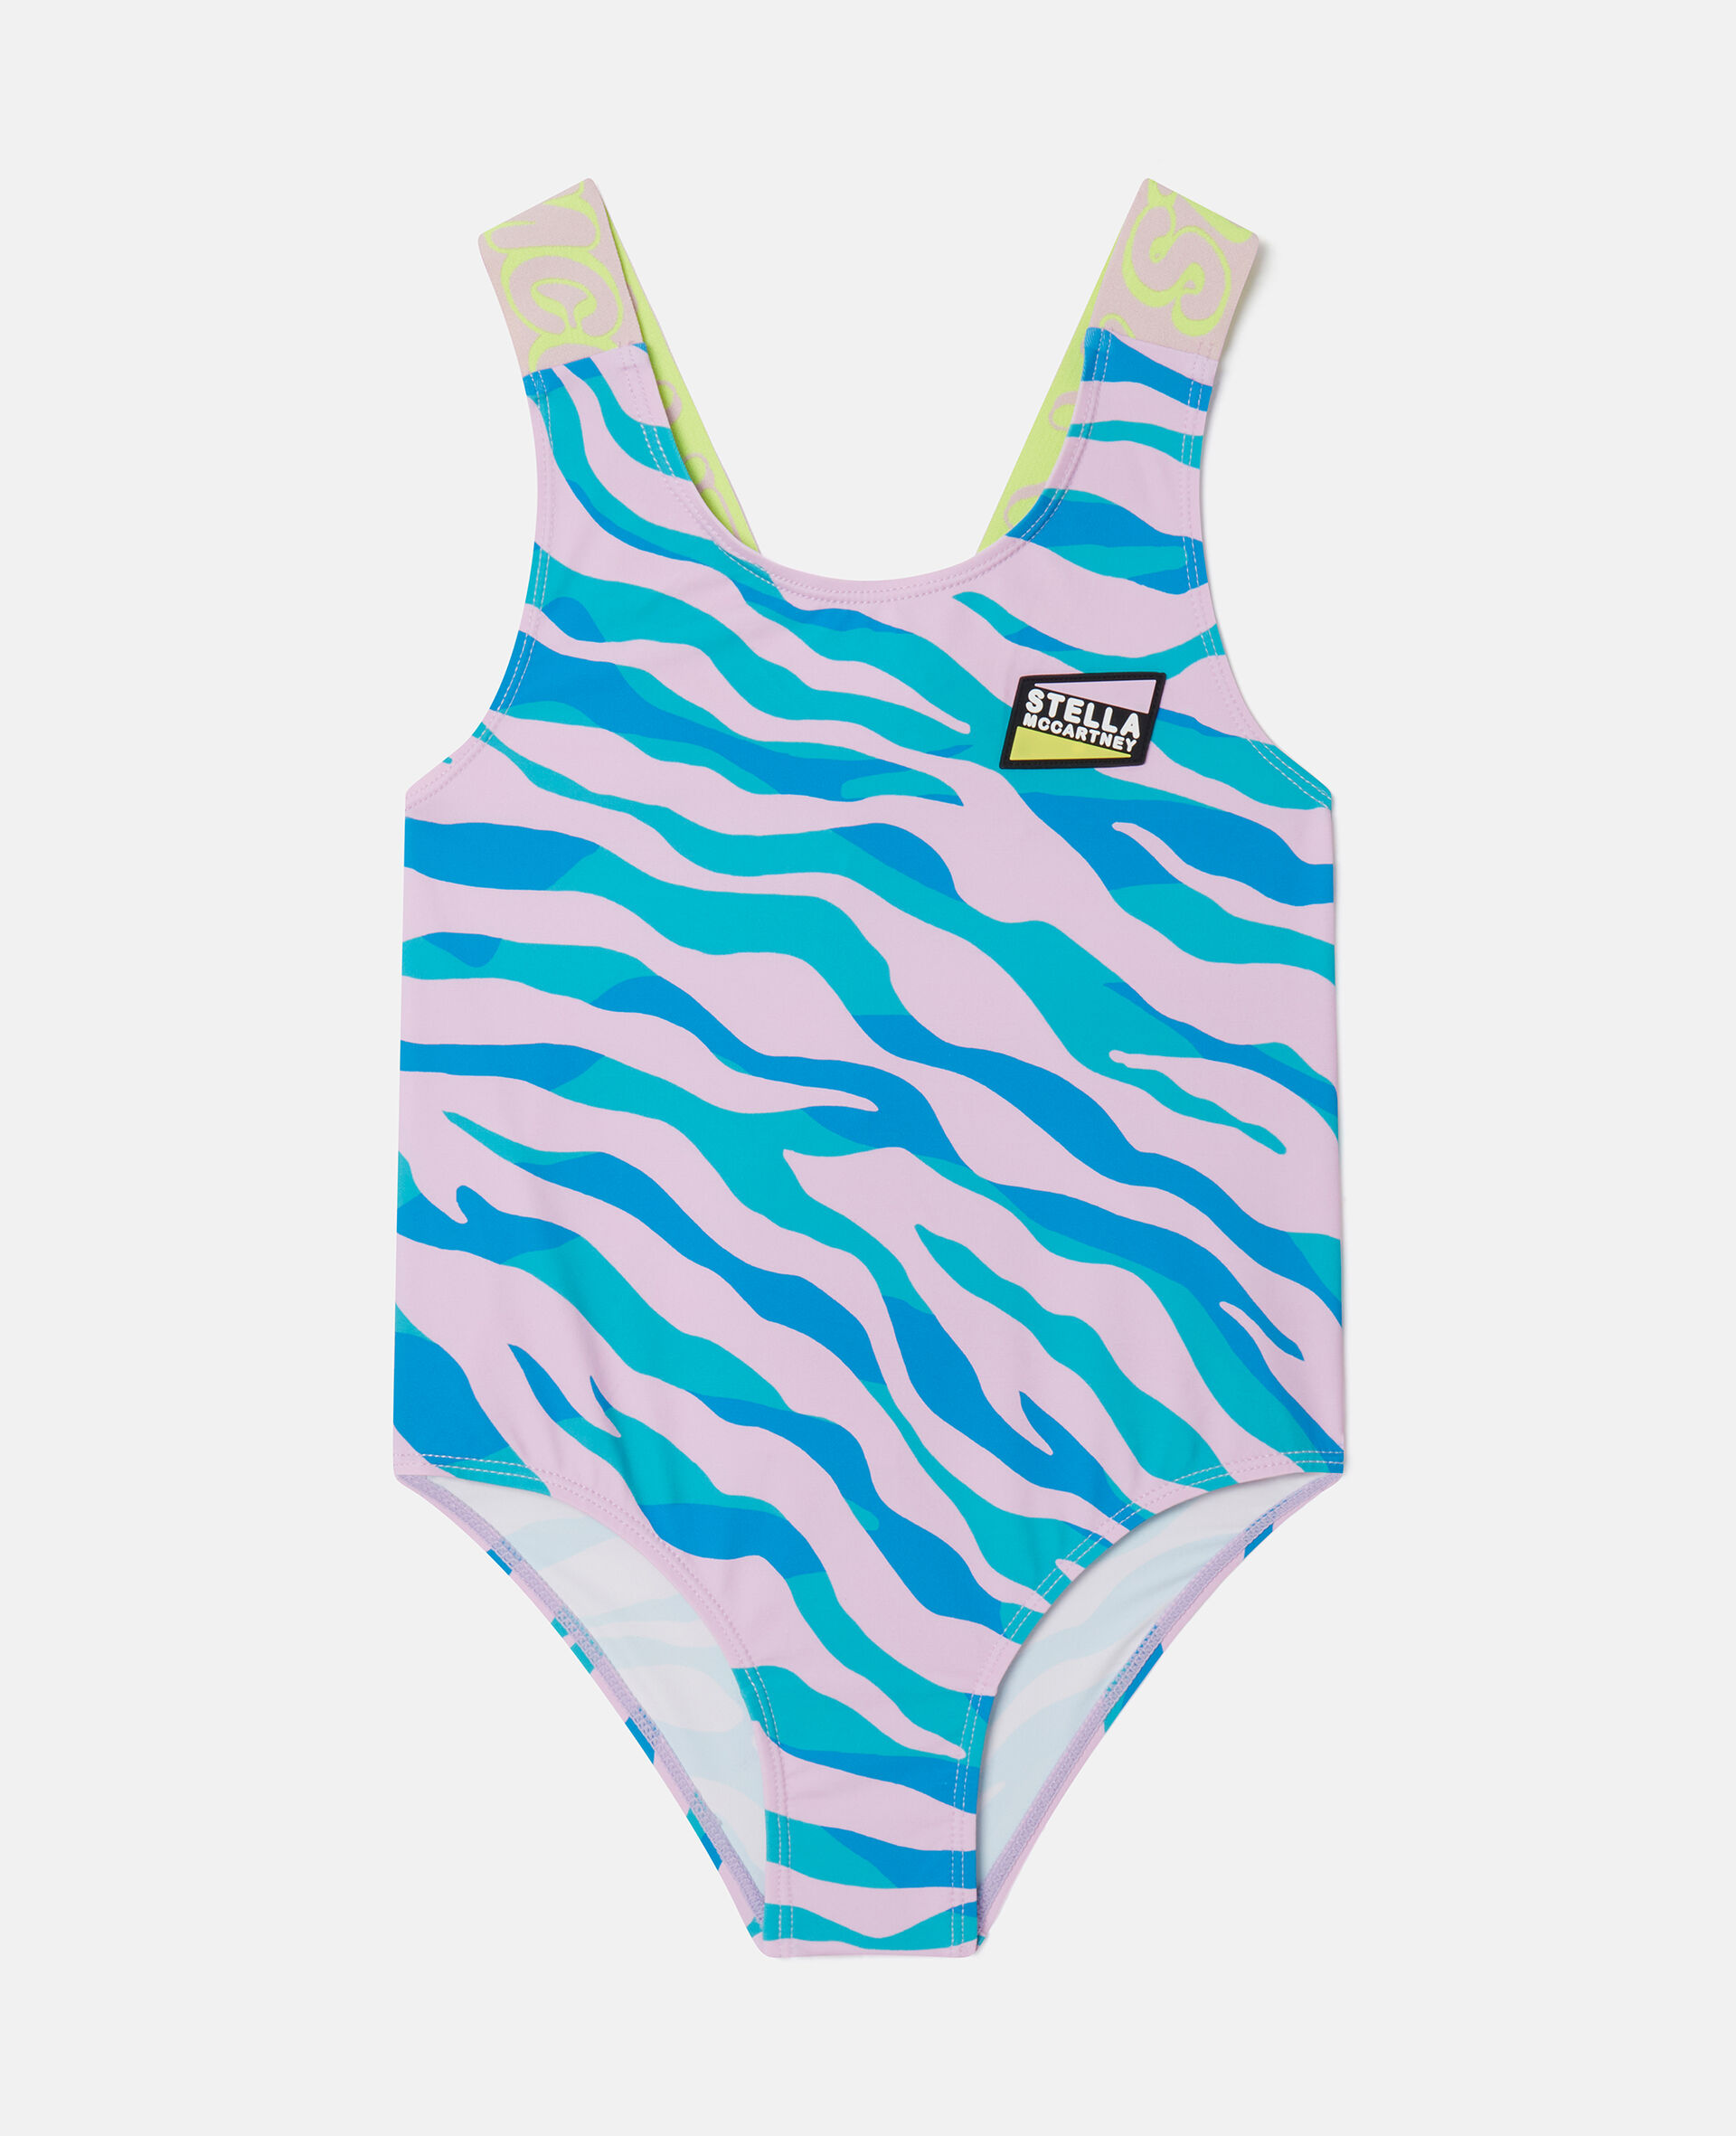 Zebra Print Swimsuit-Multicolored-large image number 0